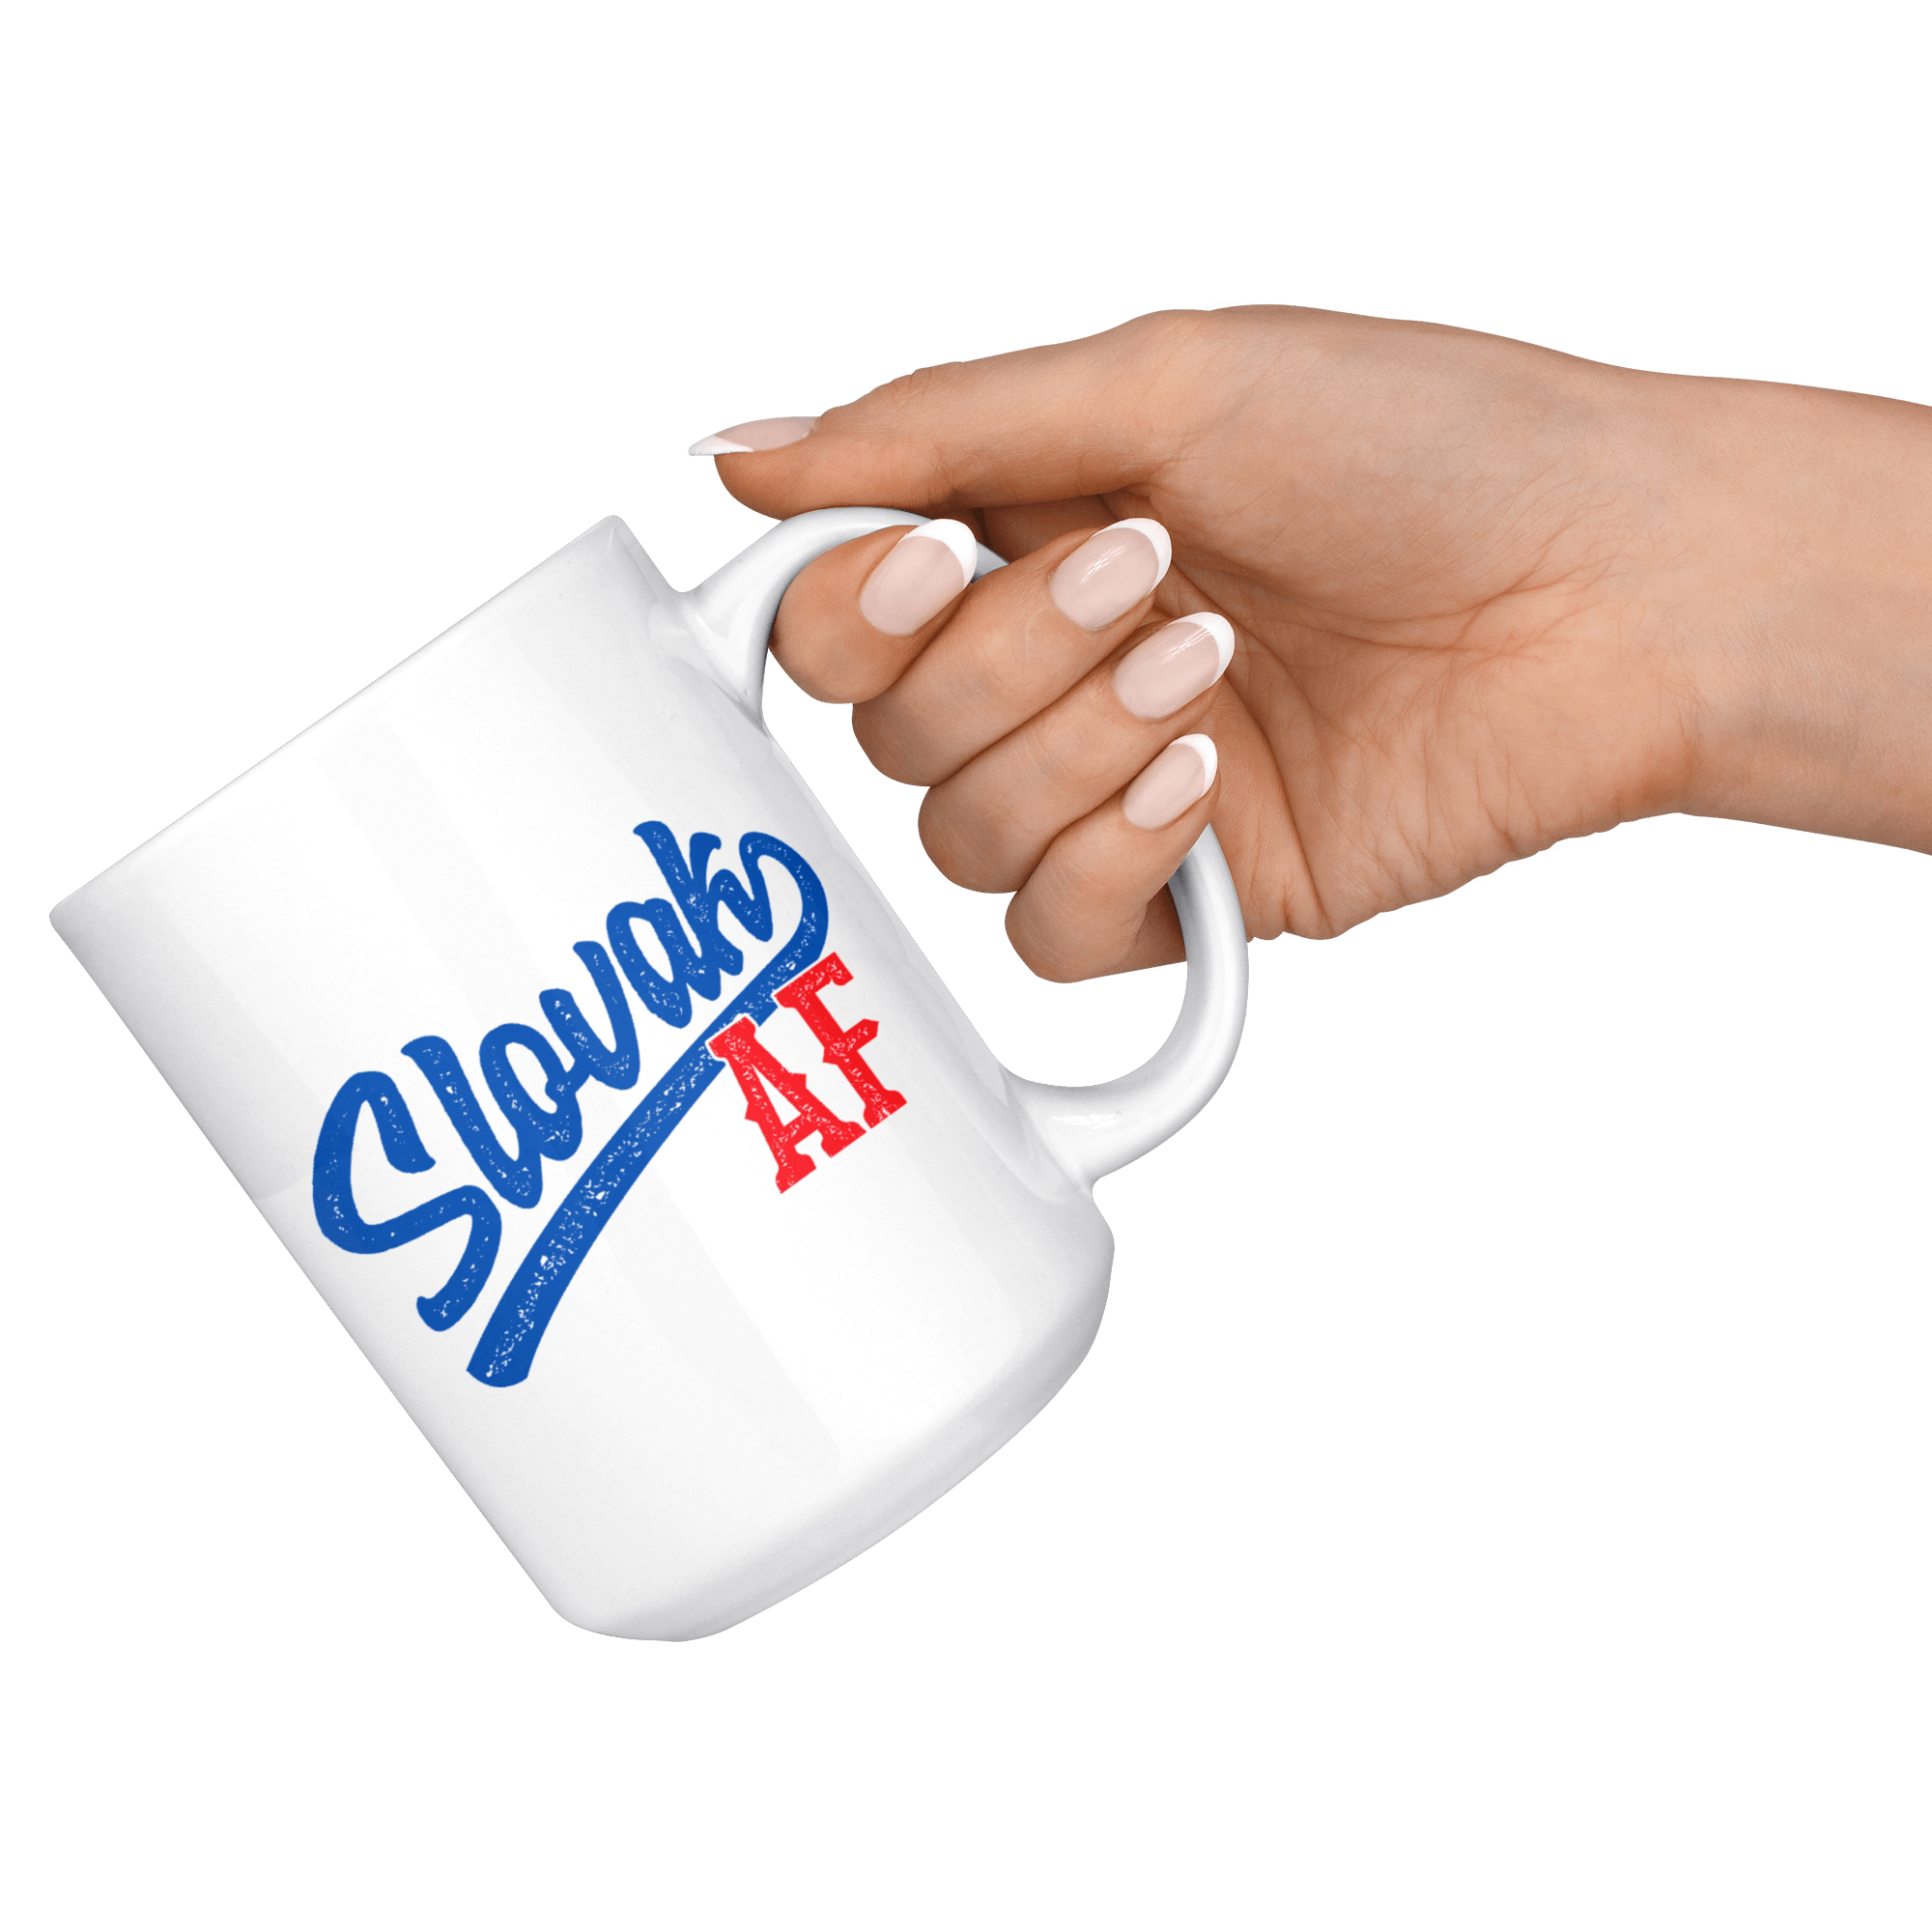 Slovak AF Coffee Mug Drinkware teelaunch   